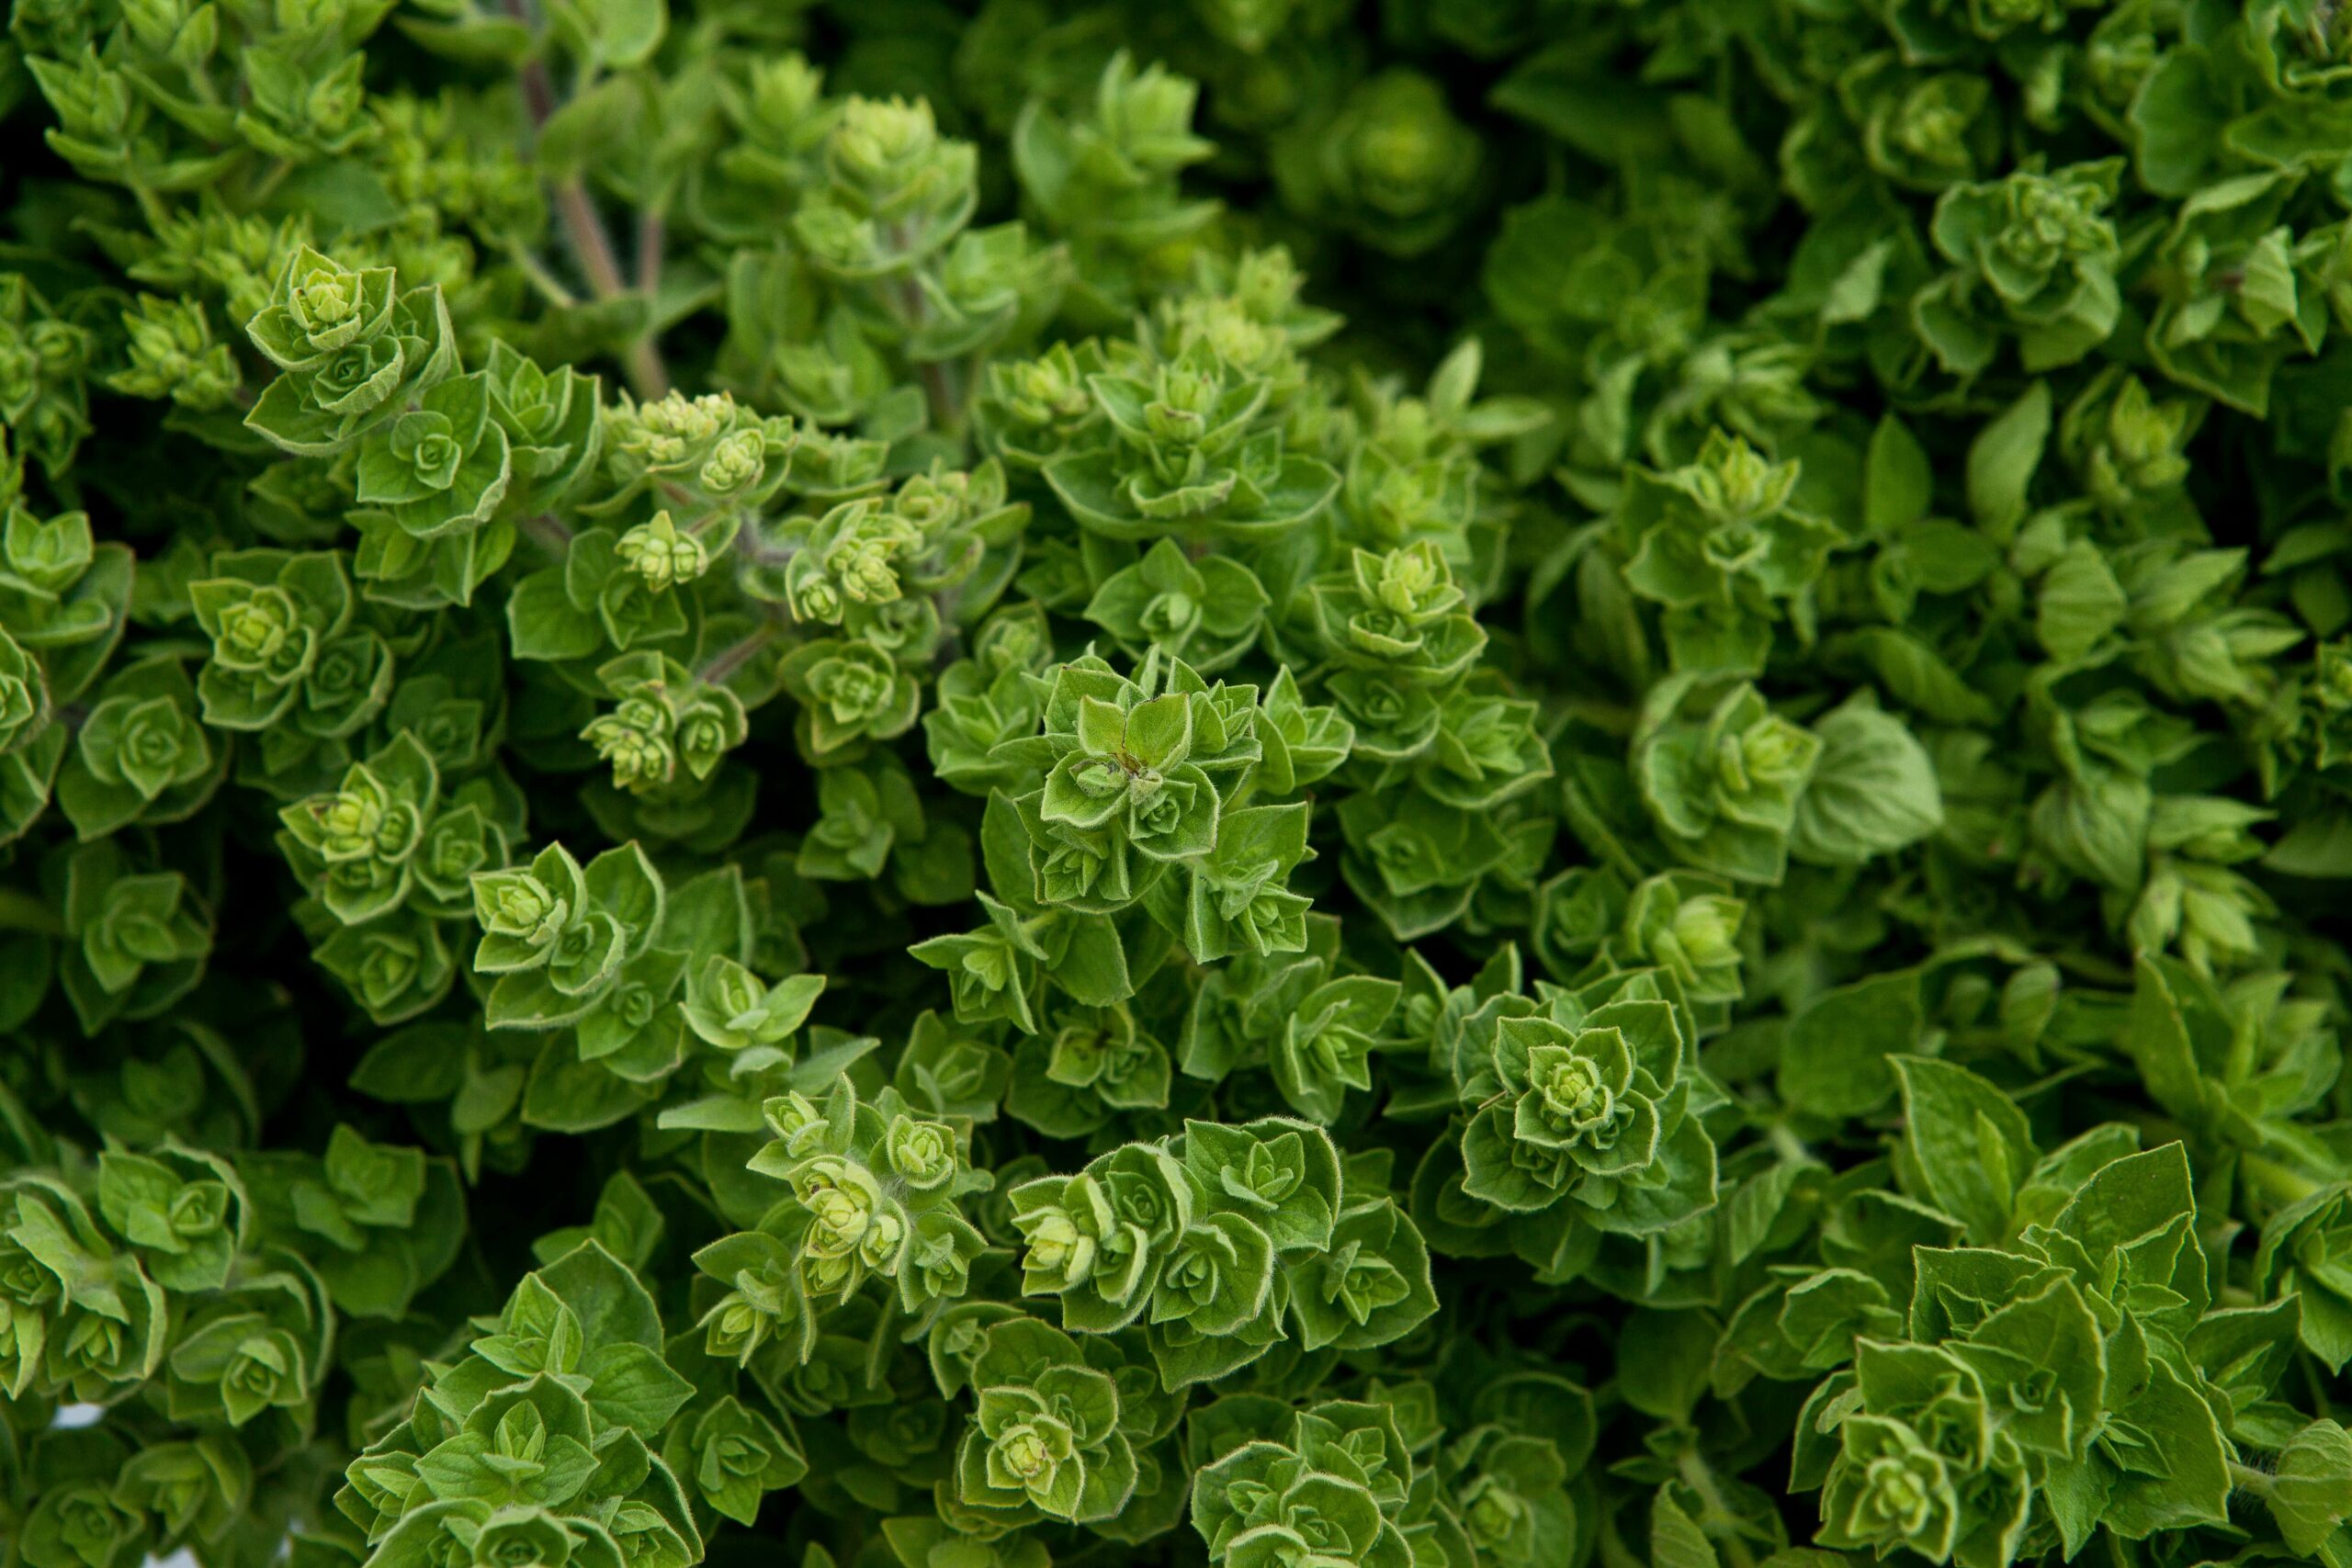 A close up of an oregano plant.